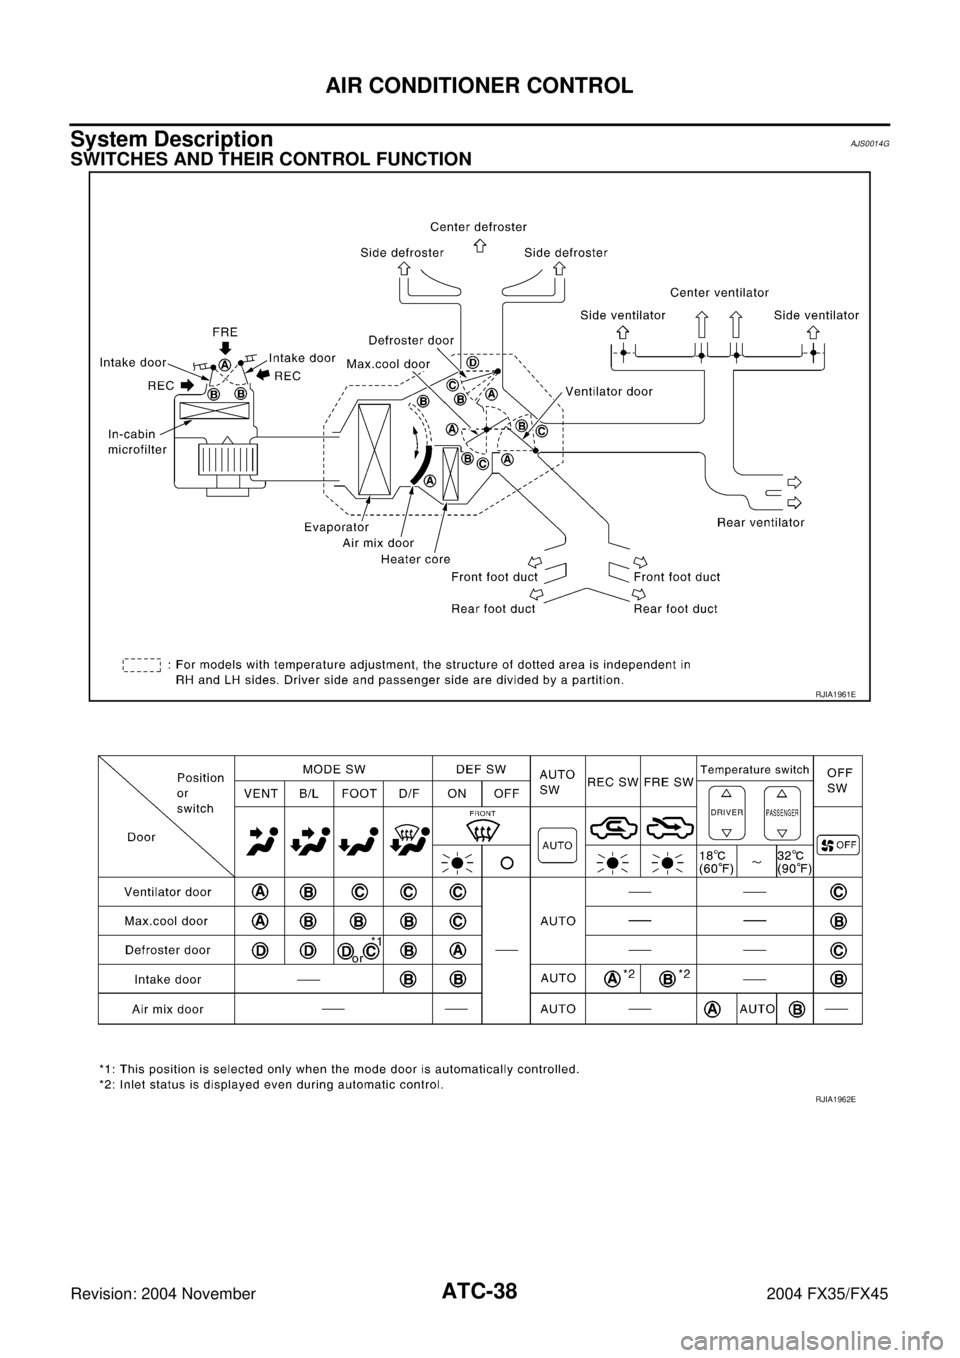 INFINITI FX35 2004  Service Manual ATC-38
AIR CONDITIONER CONTROL
Revision: 2004 November 2004 FX35/FX45
System DescriptionAJS0014G
SWITCHES AND THEIR CONTROL FUNCTION
RJIA1961E
RJIA1962E 